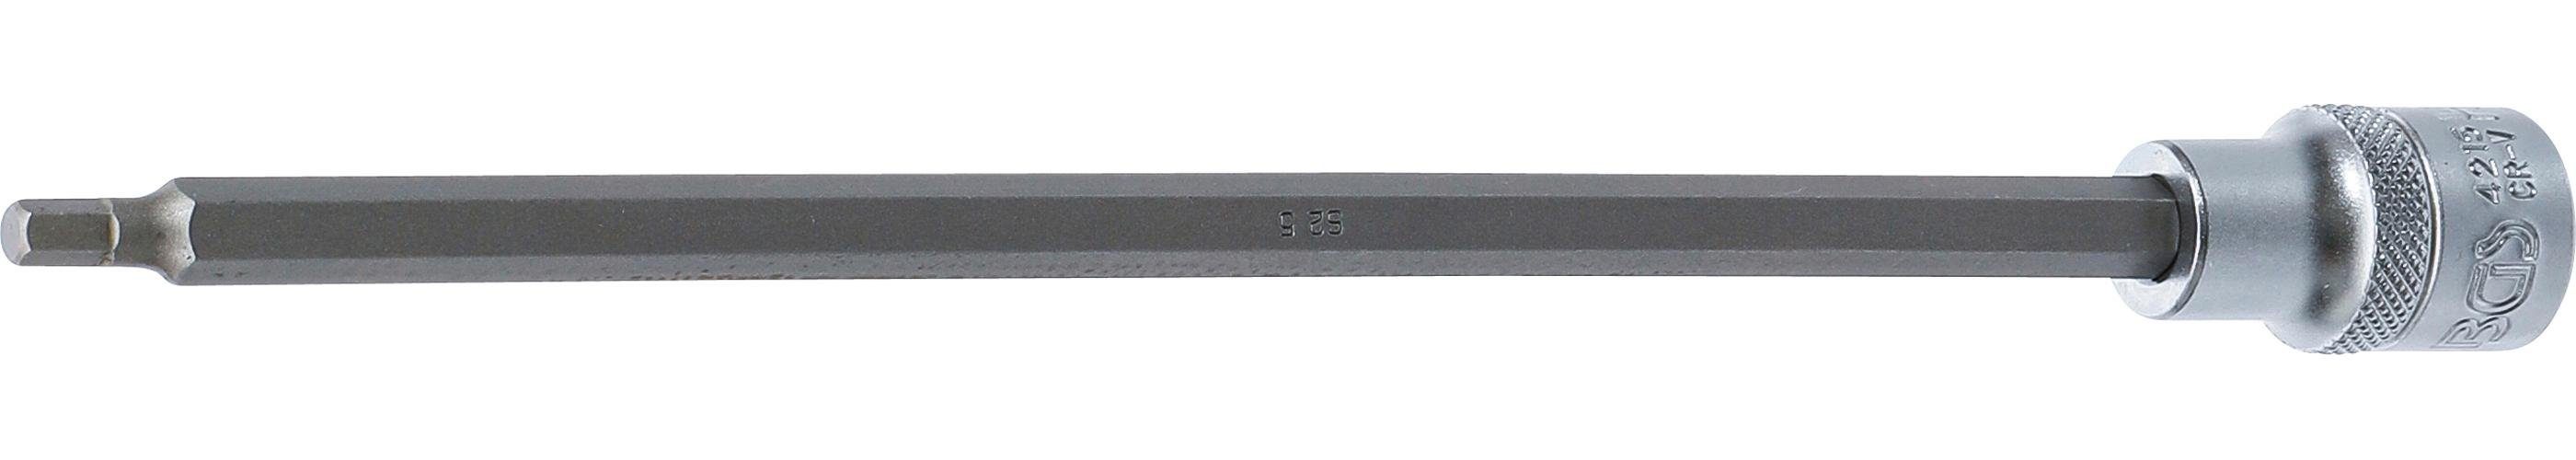 Sechskant-Bit Länge Innensechskant Antrieb 5 mm, 12,5 mm Innenvierkant BGS 240 (1/2), mm technic Bit-Einsatz,